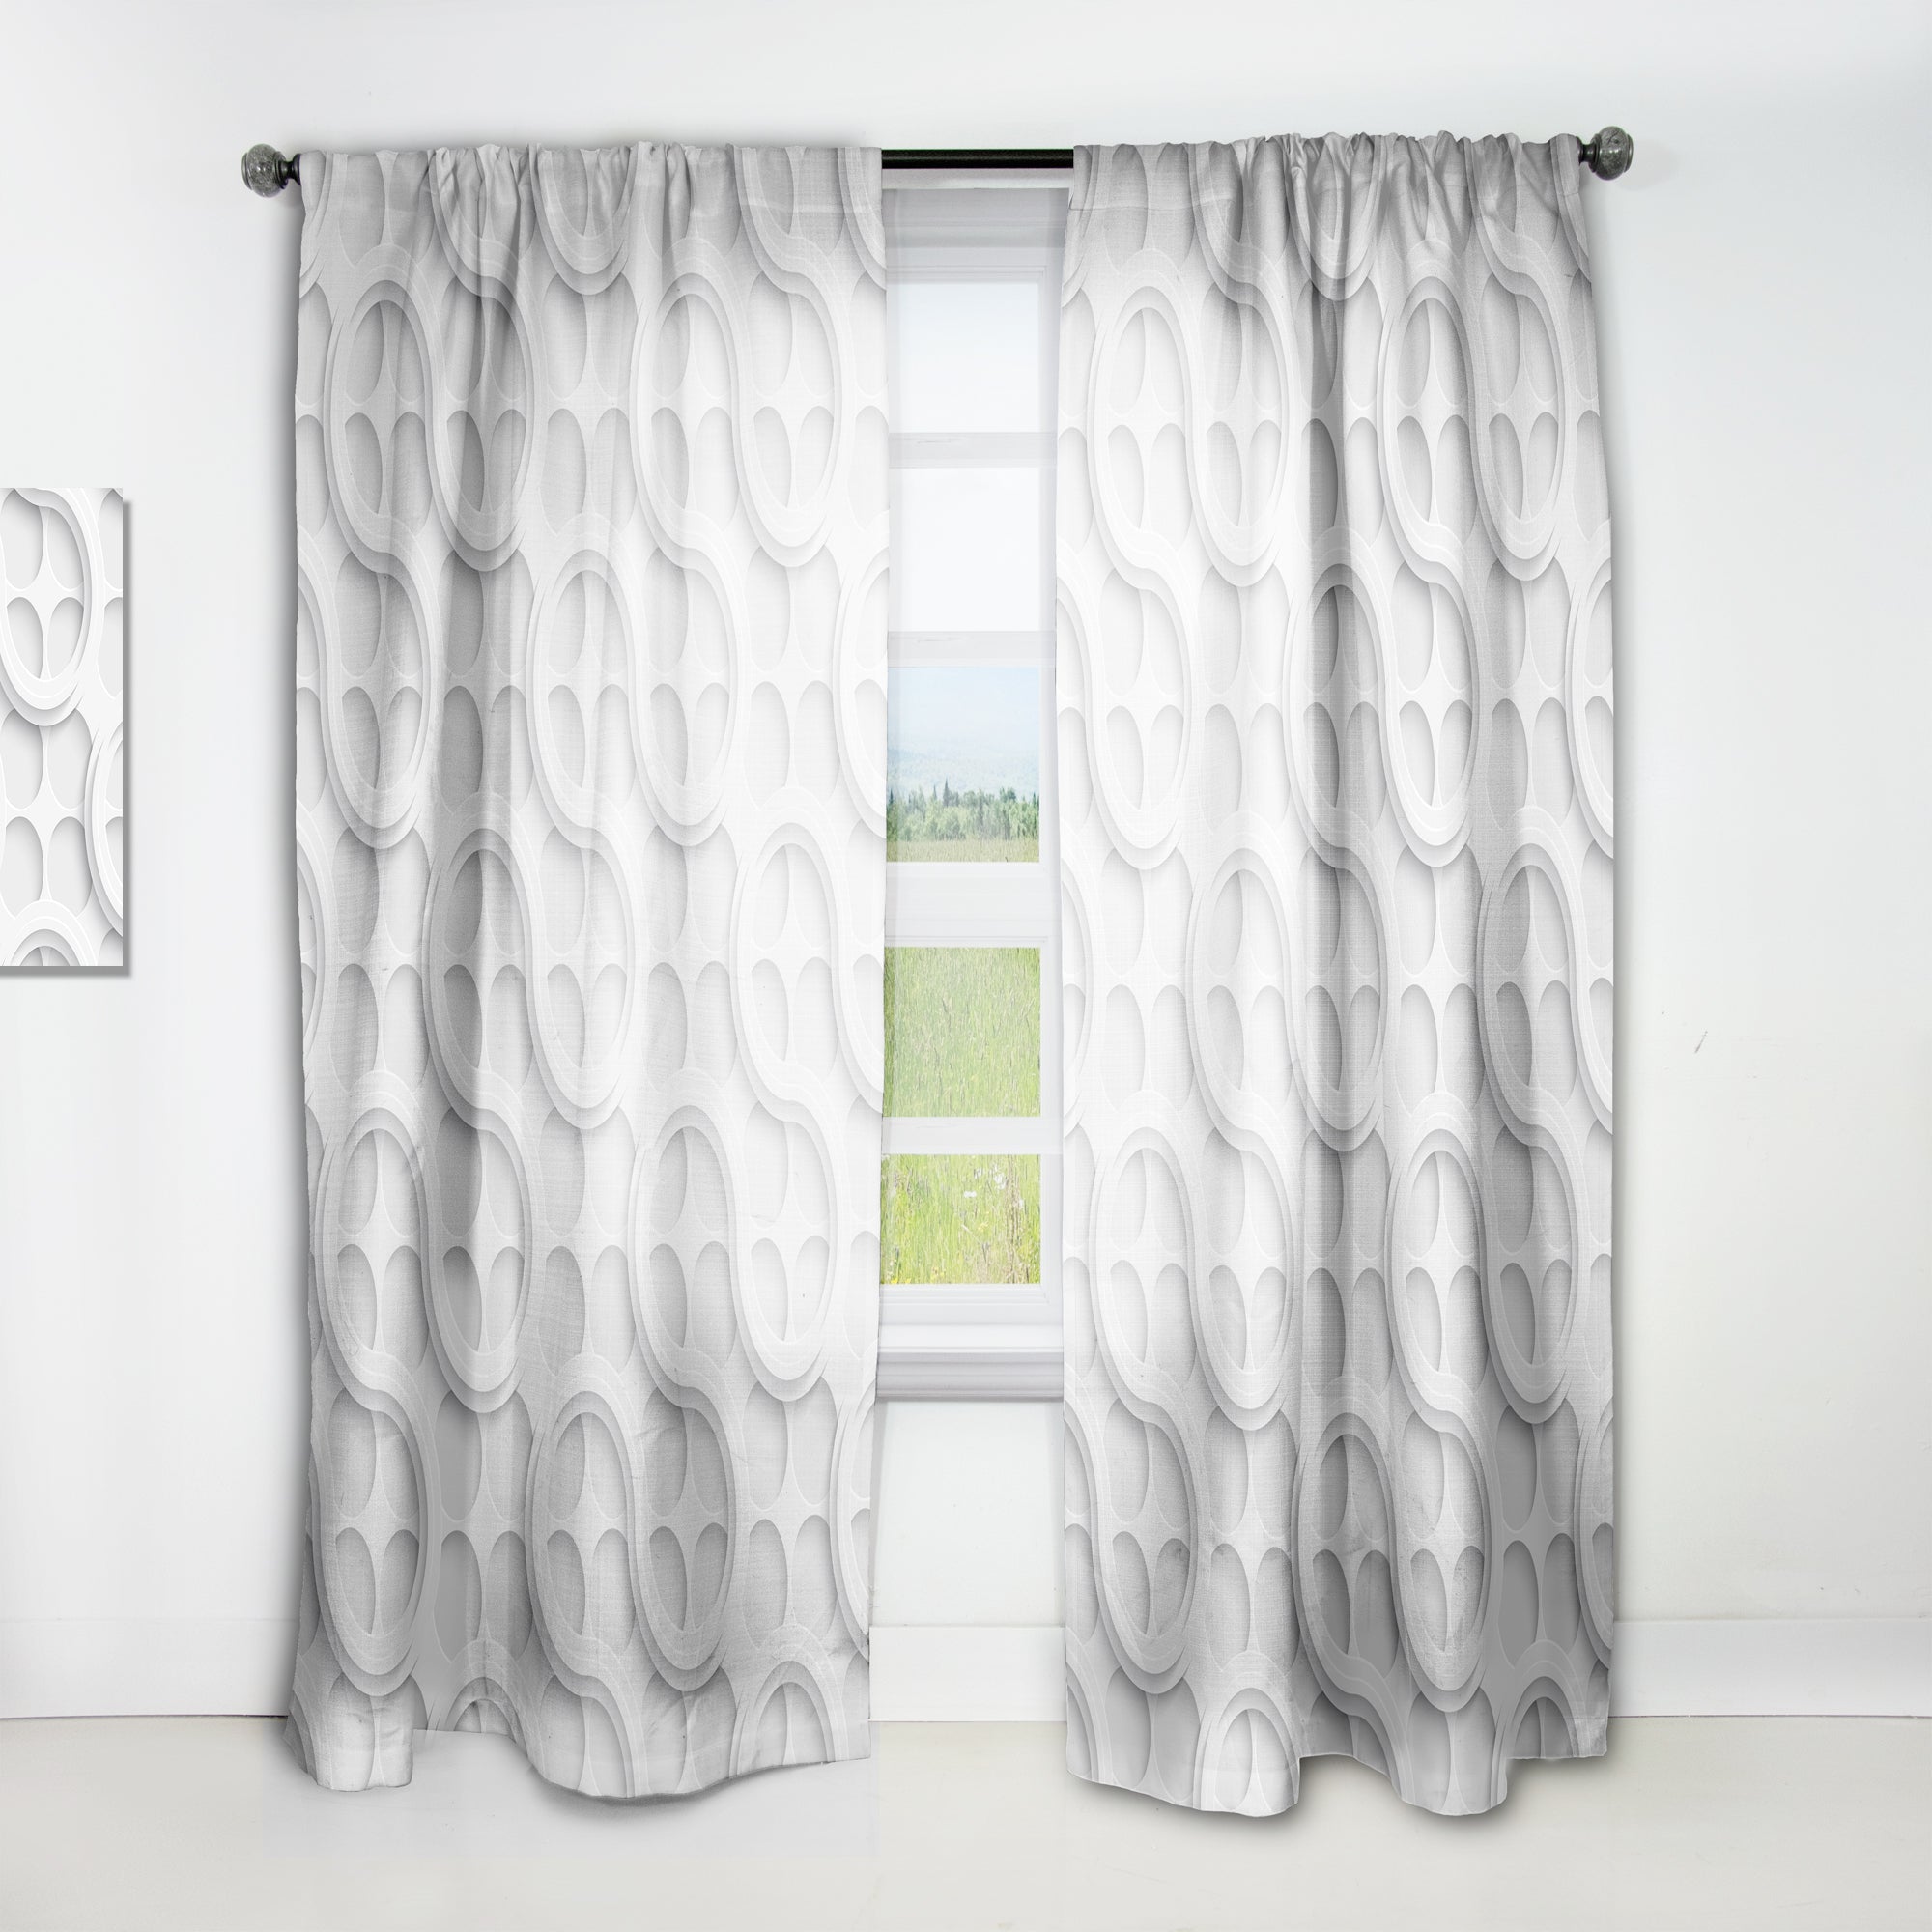 Designart 'Lattice' Scandinavian Curtain Panel